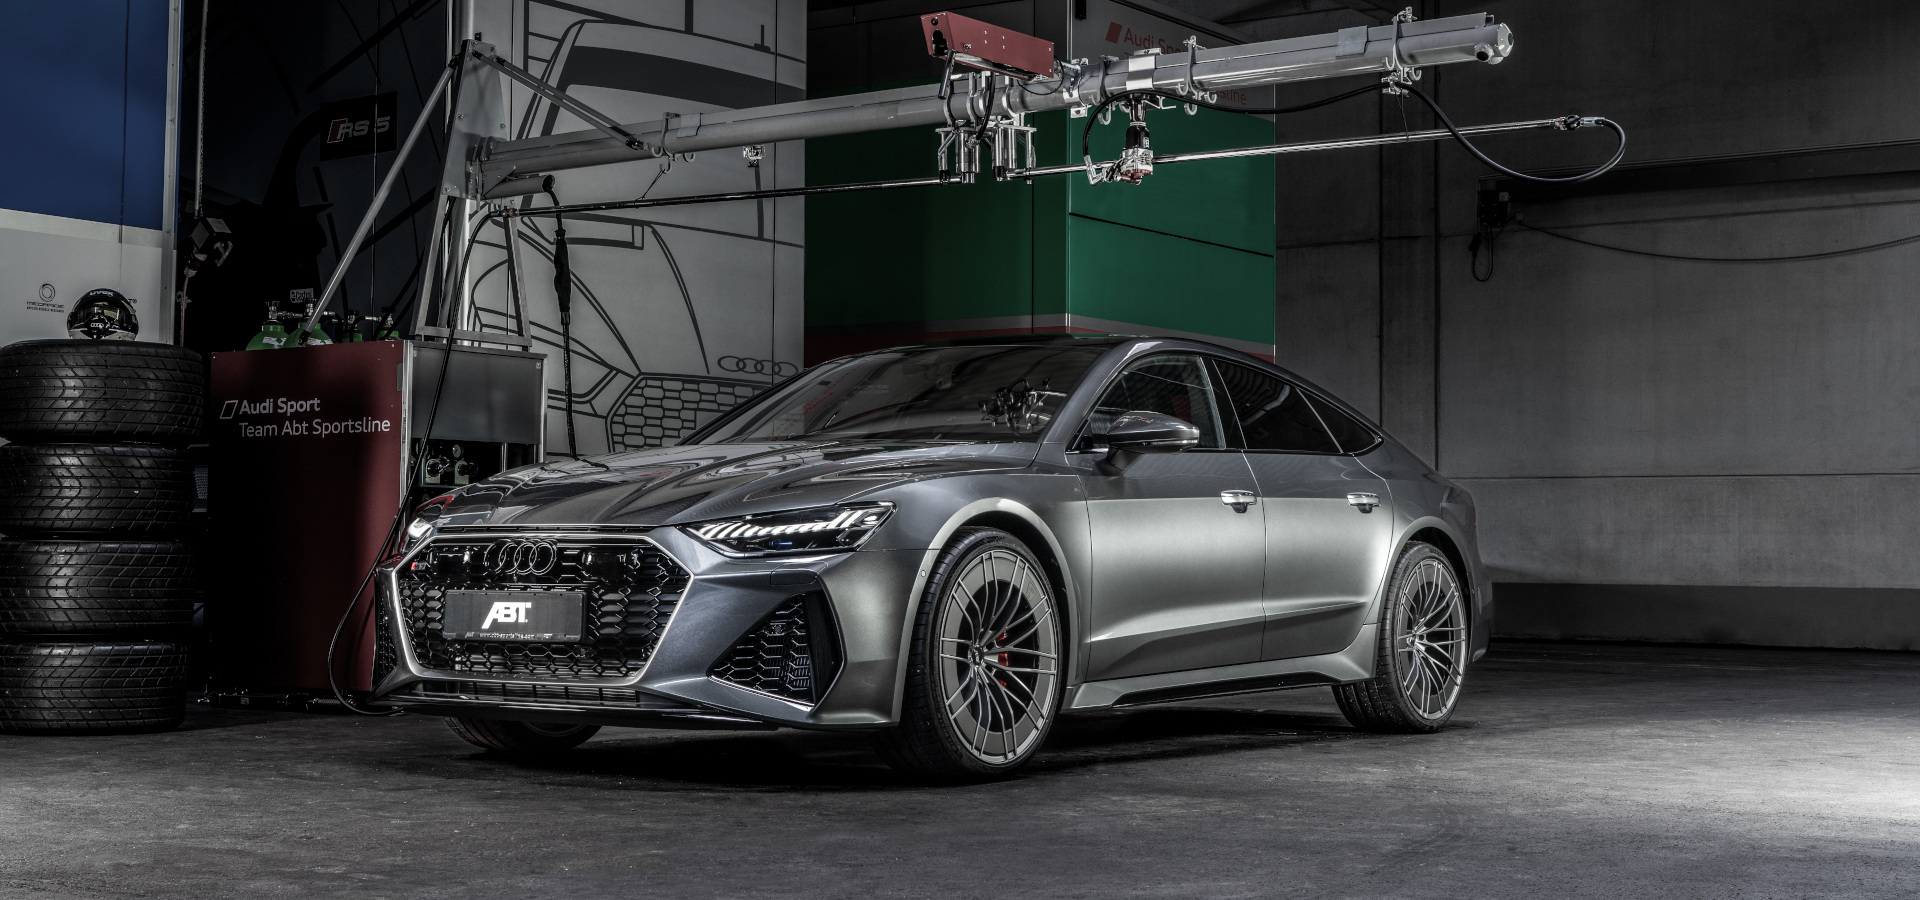 Audi RS7 - Audi Tuning, VW Tuning, Chiptuning von ABT Sportsline.